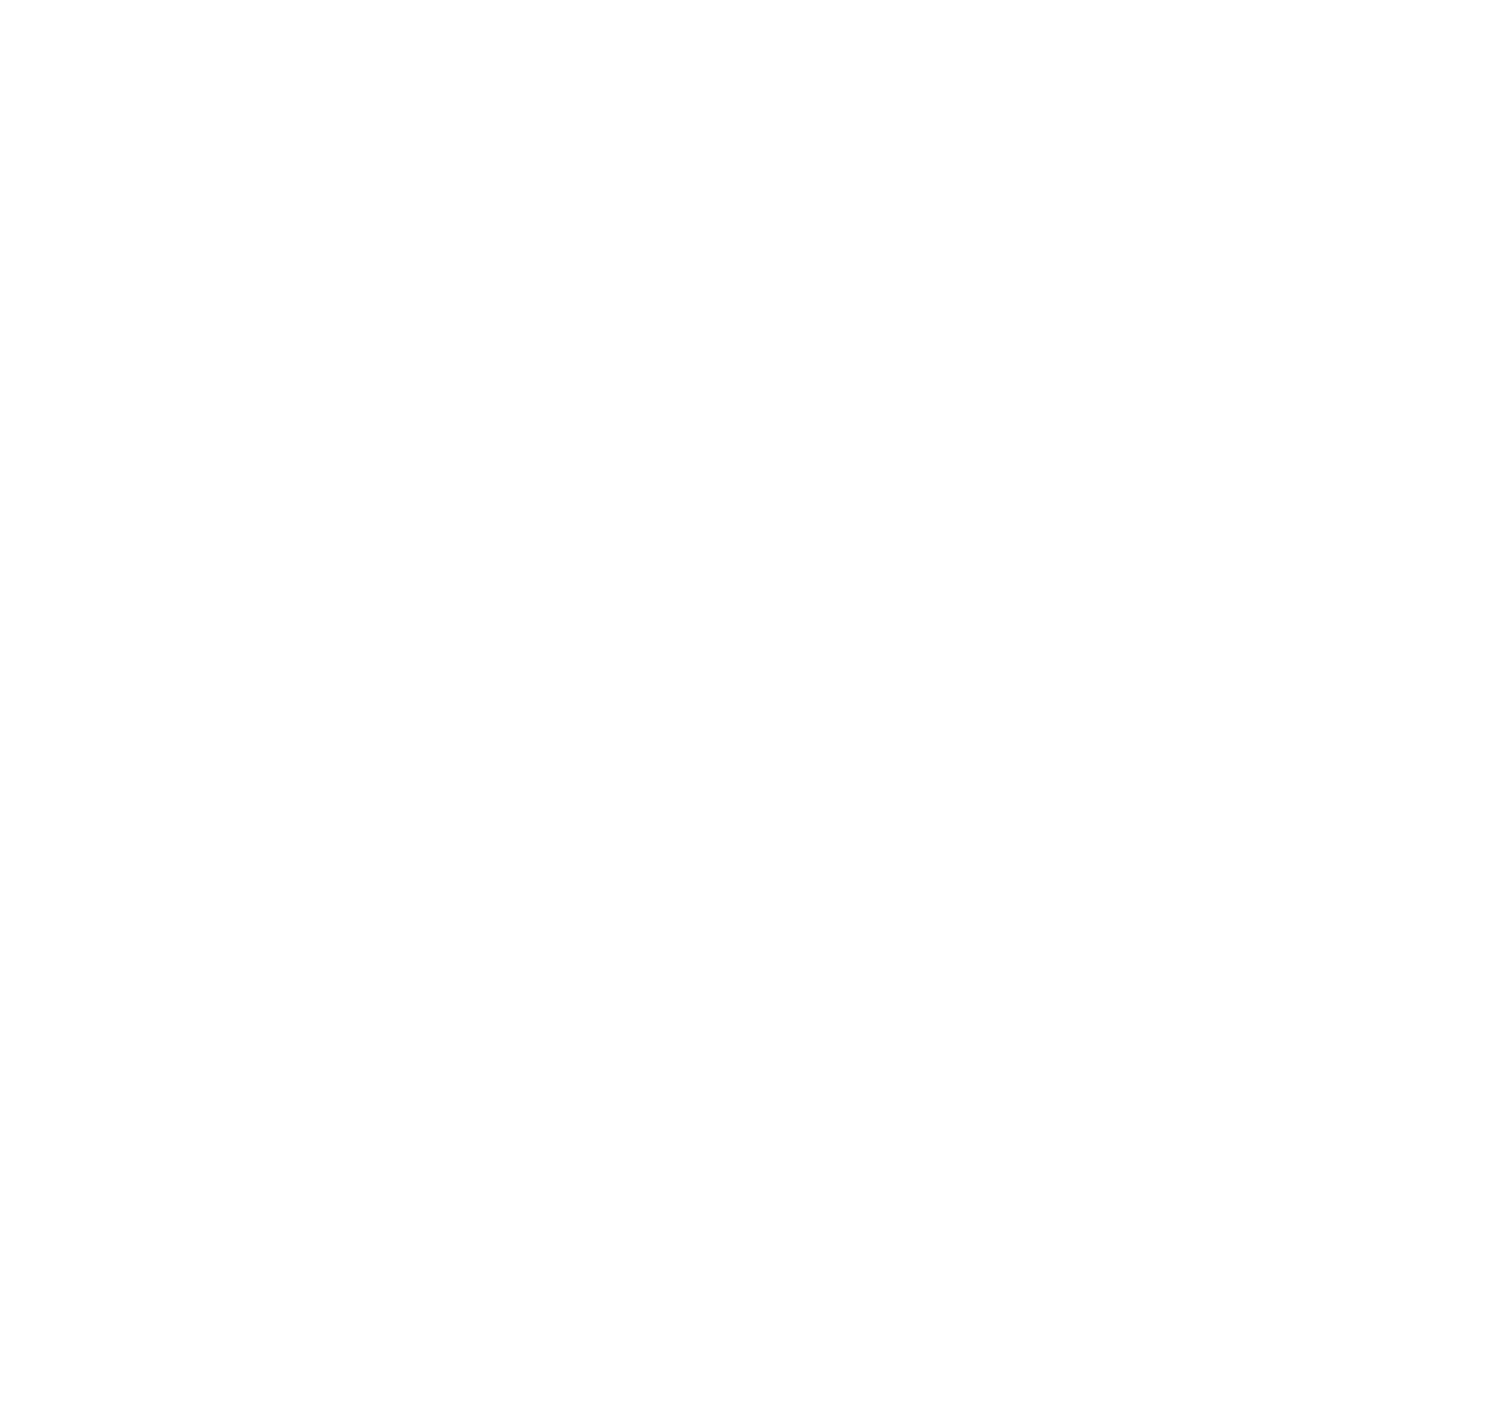 Mill Farm Livery